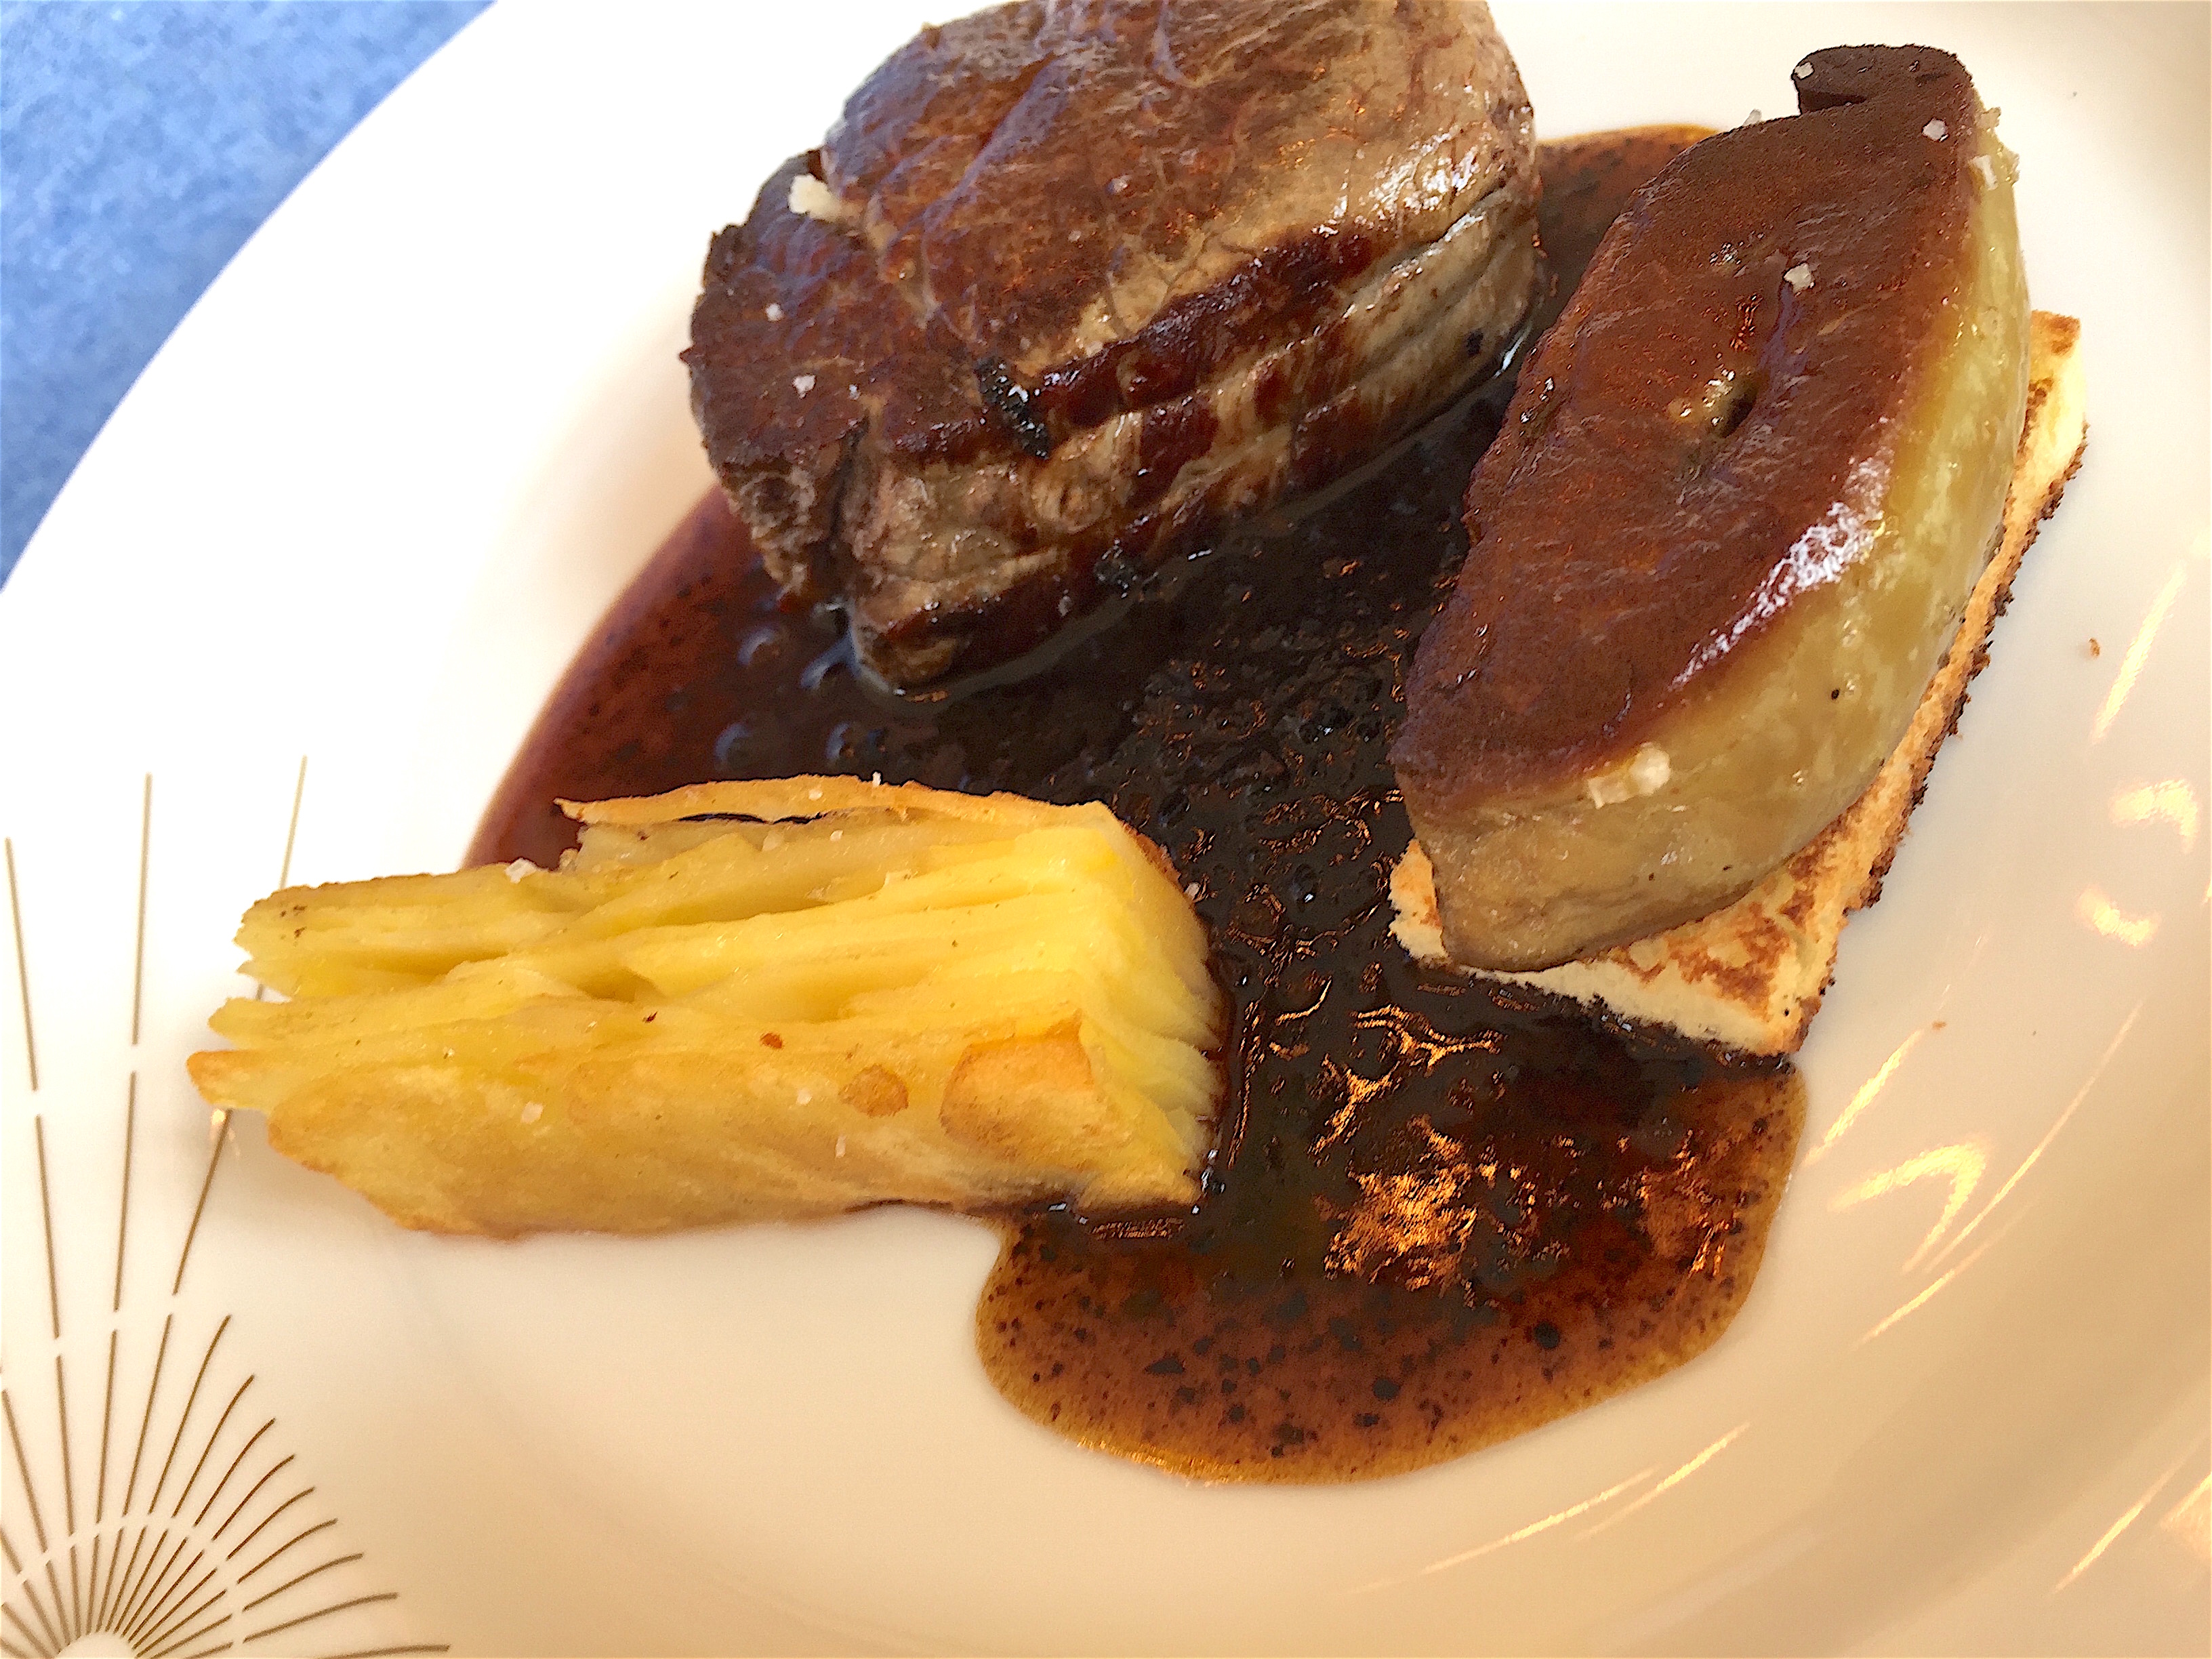 Ore restaurant, Versailles - Beef filet with foie gras and potatoes Anna @ Alexander Lobrano